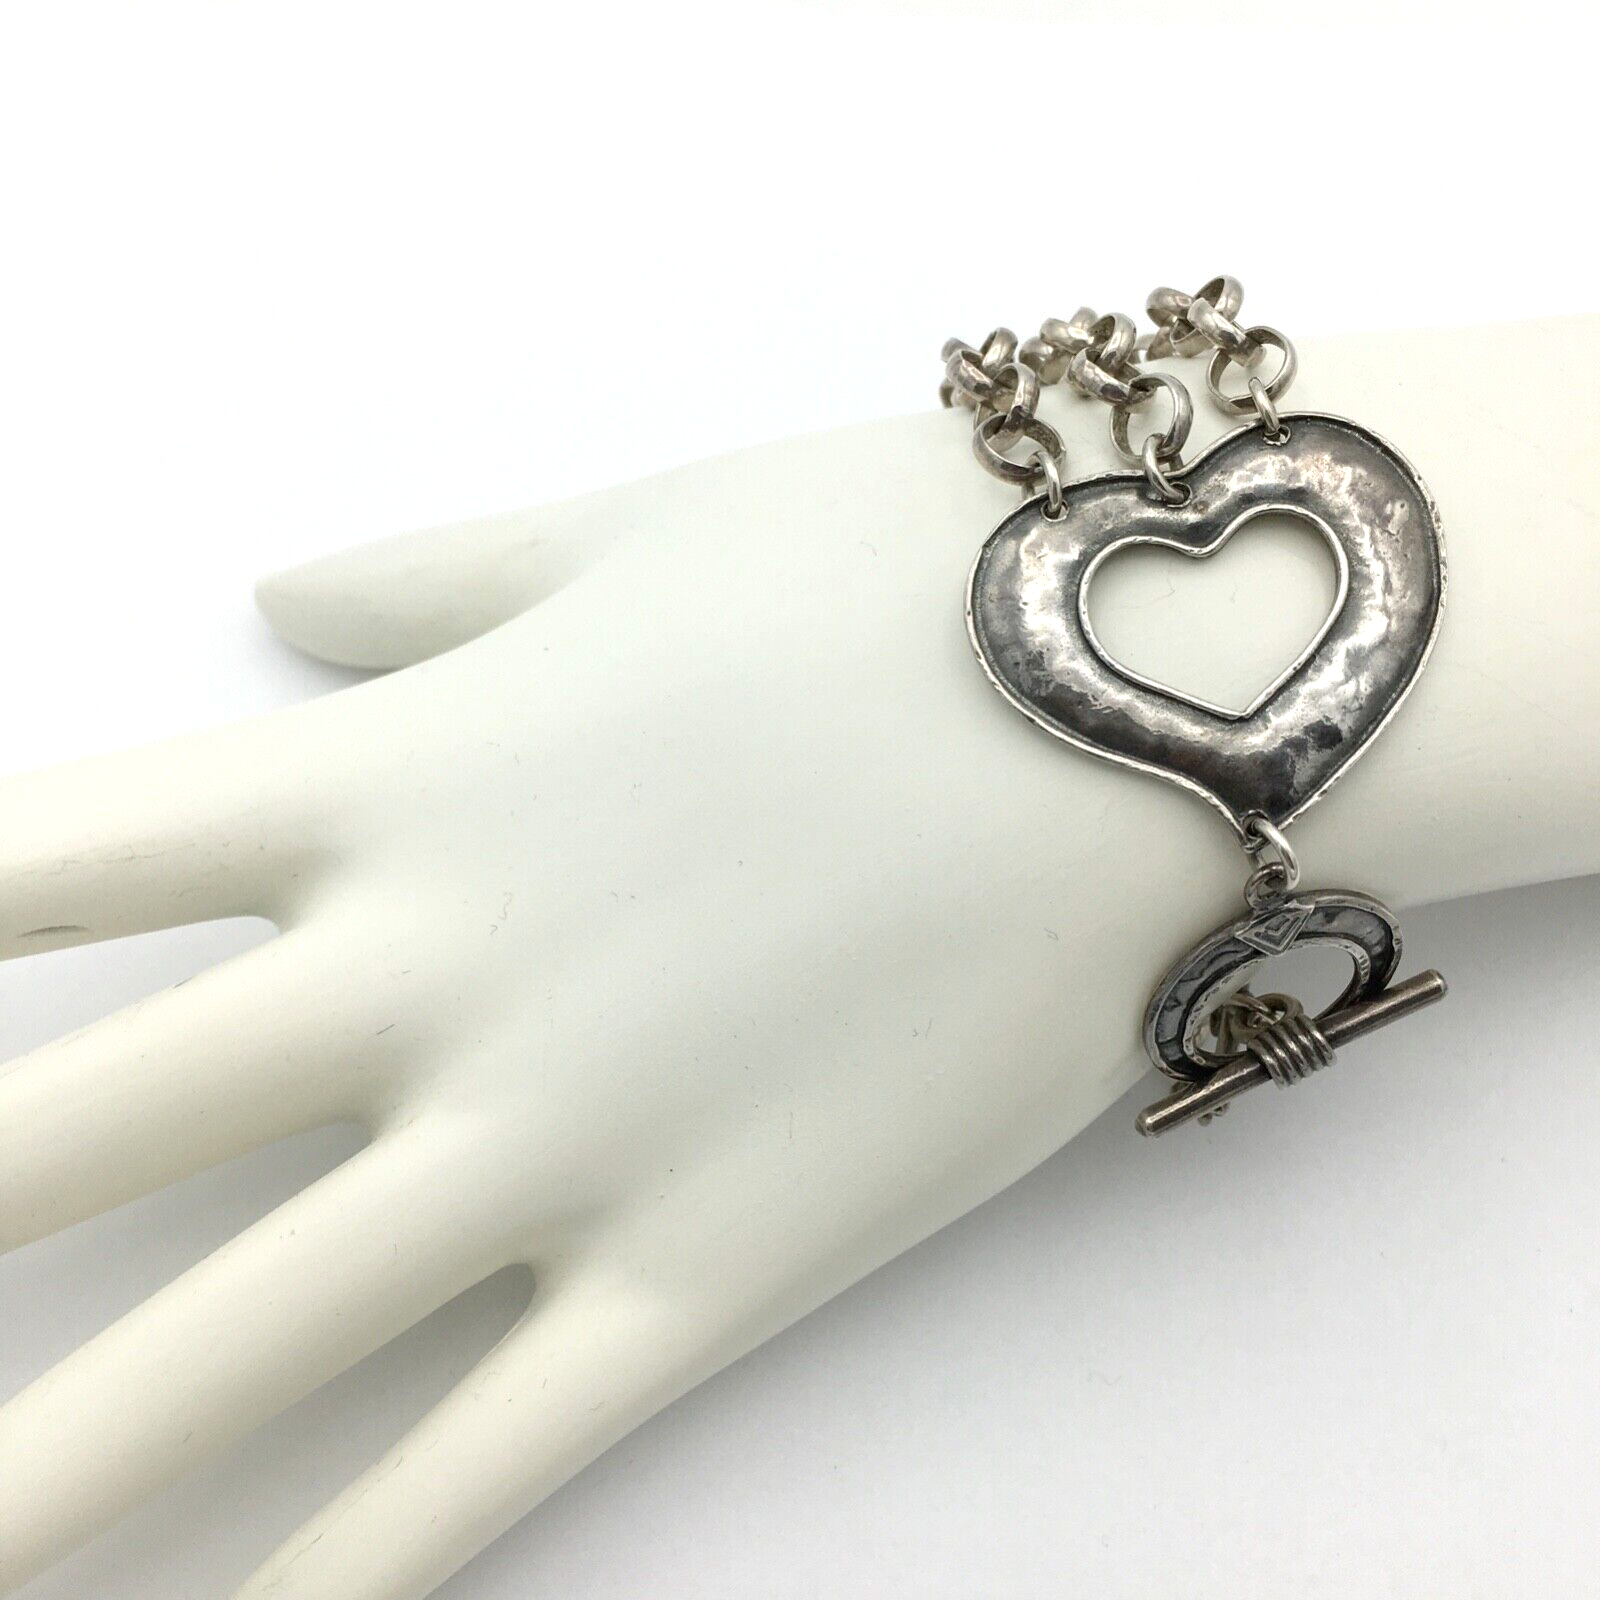 SILPADA sterling silver bracelet B1510 - 3-strand rolo chain heart toggle clasp - $80.00